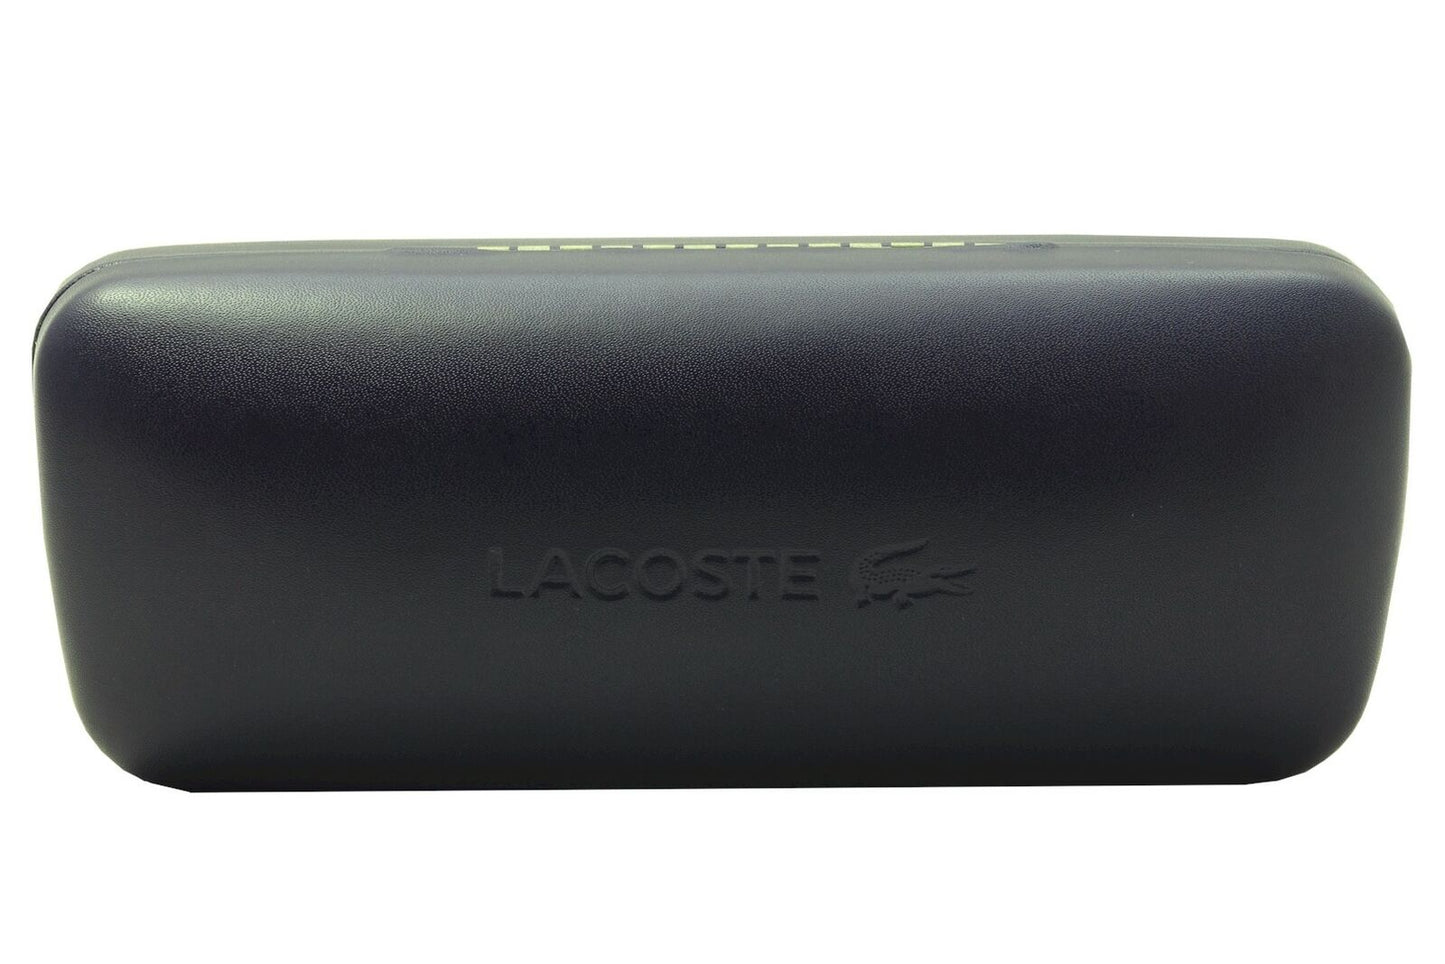 Lacoste L781SP-414 52mm New Sunglasses